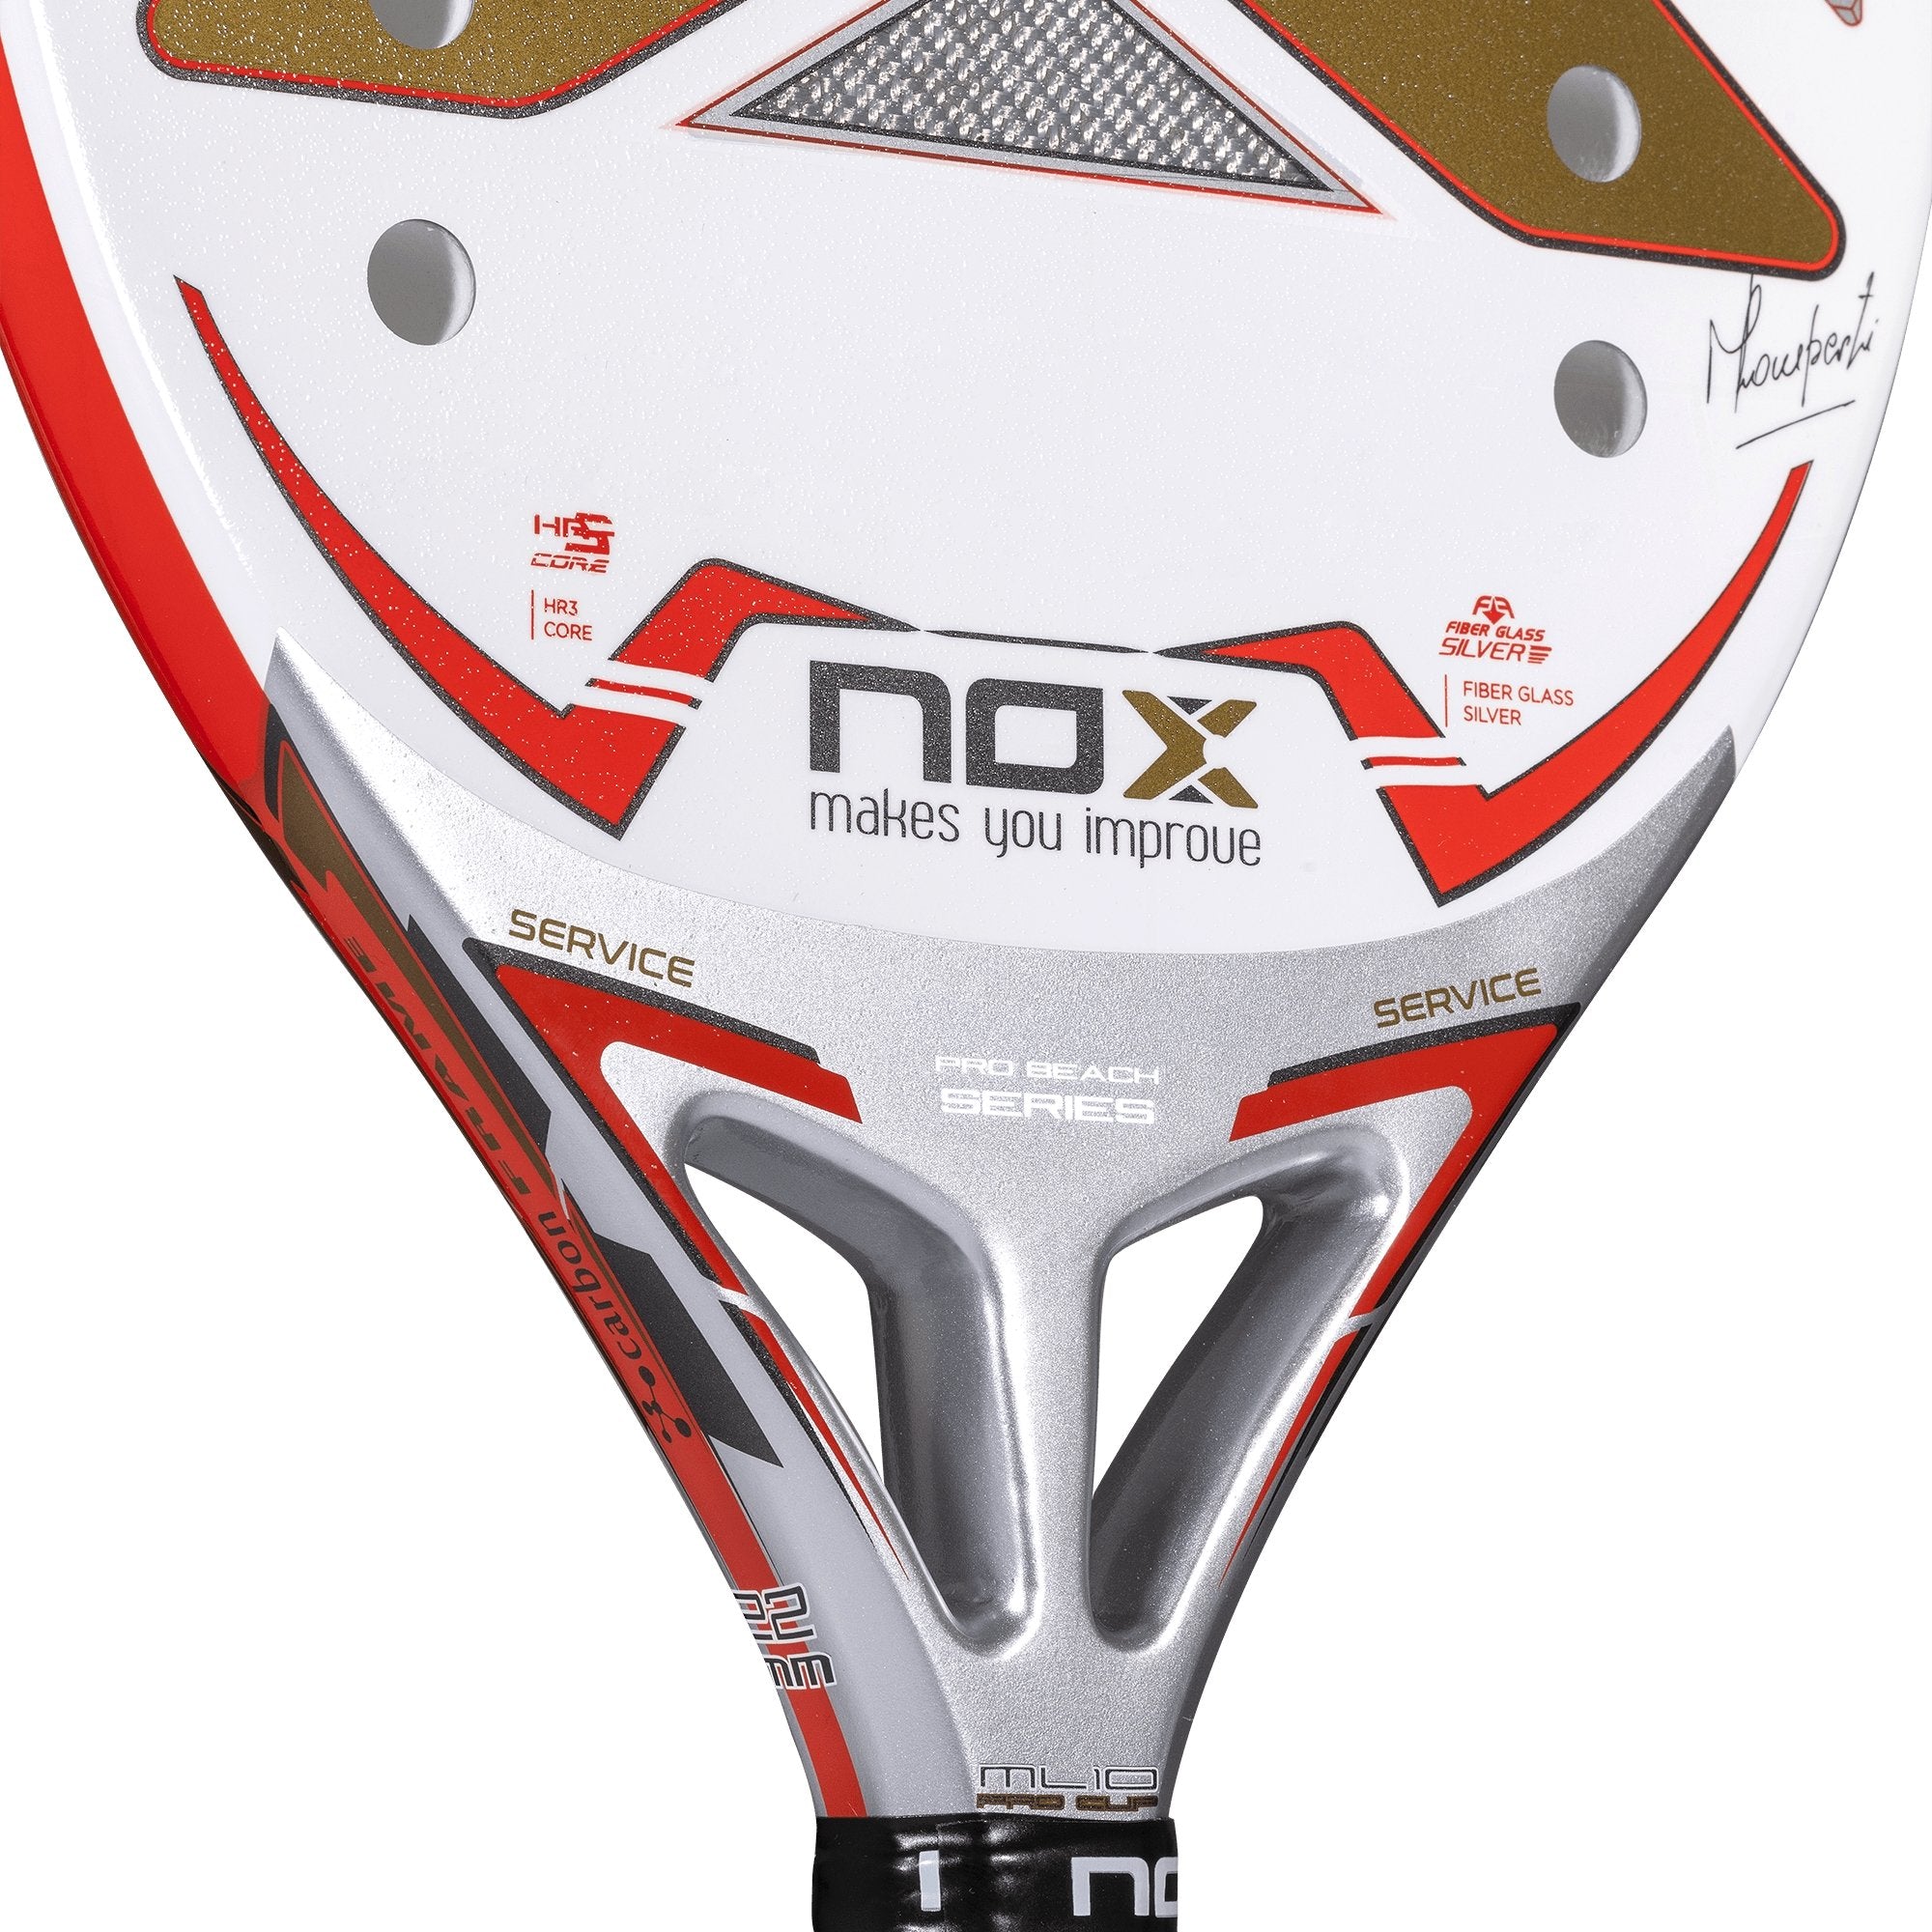 ML10 PRO CUP 2022 BEACH TENNIS RACKET - NOX